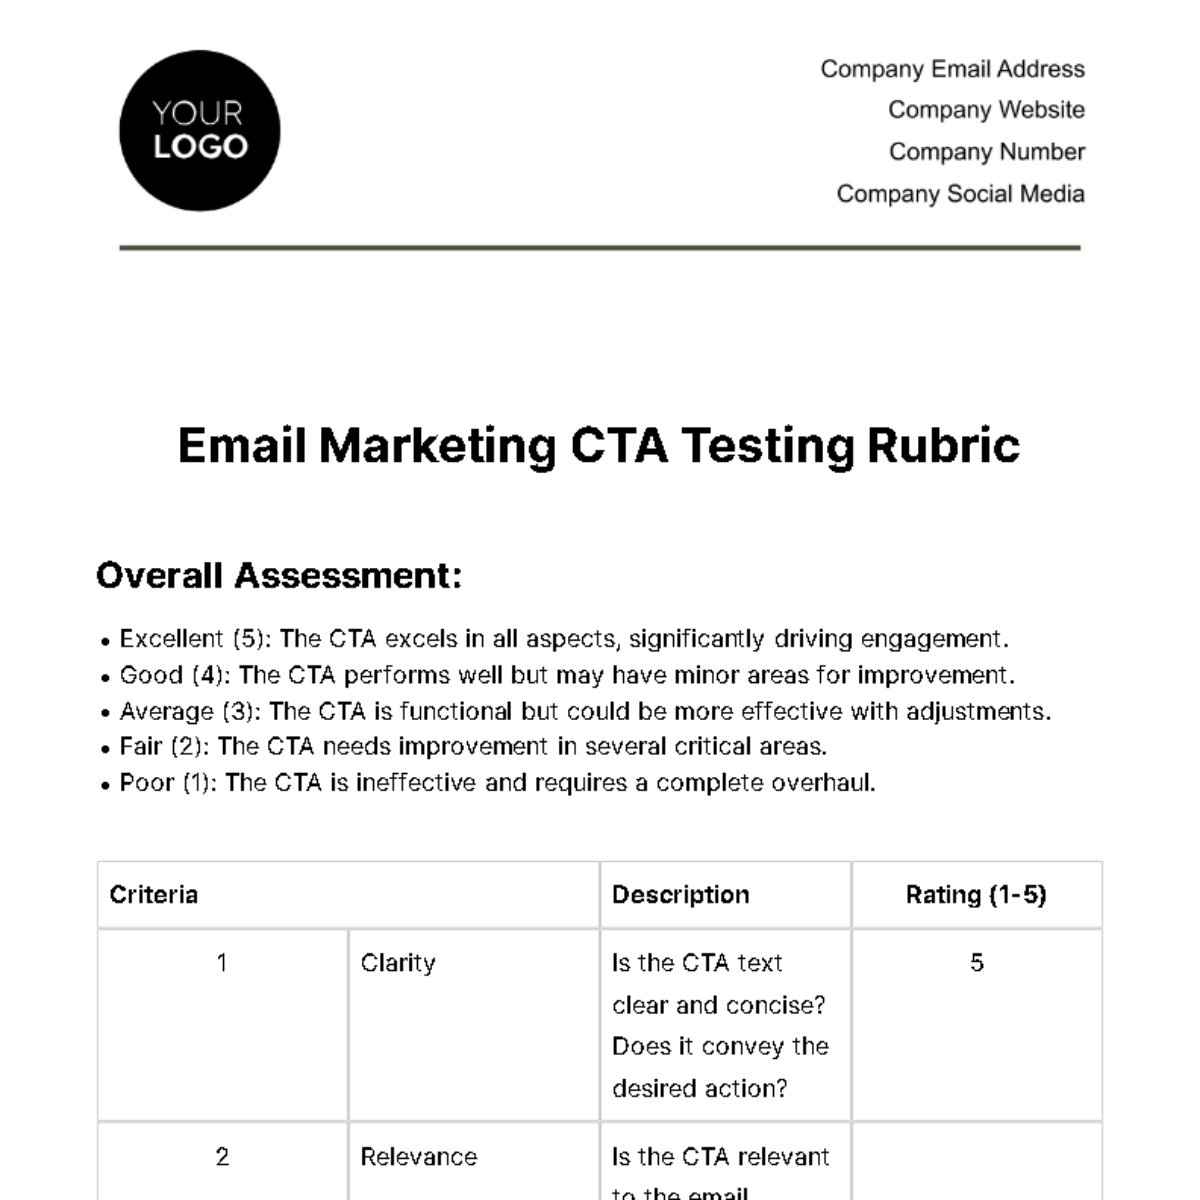 Email Marketing CTA Testing Rubric Template